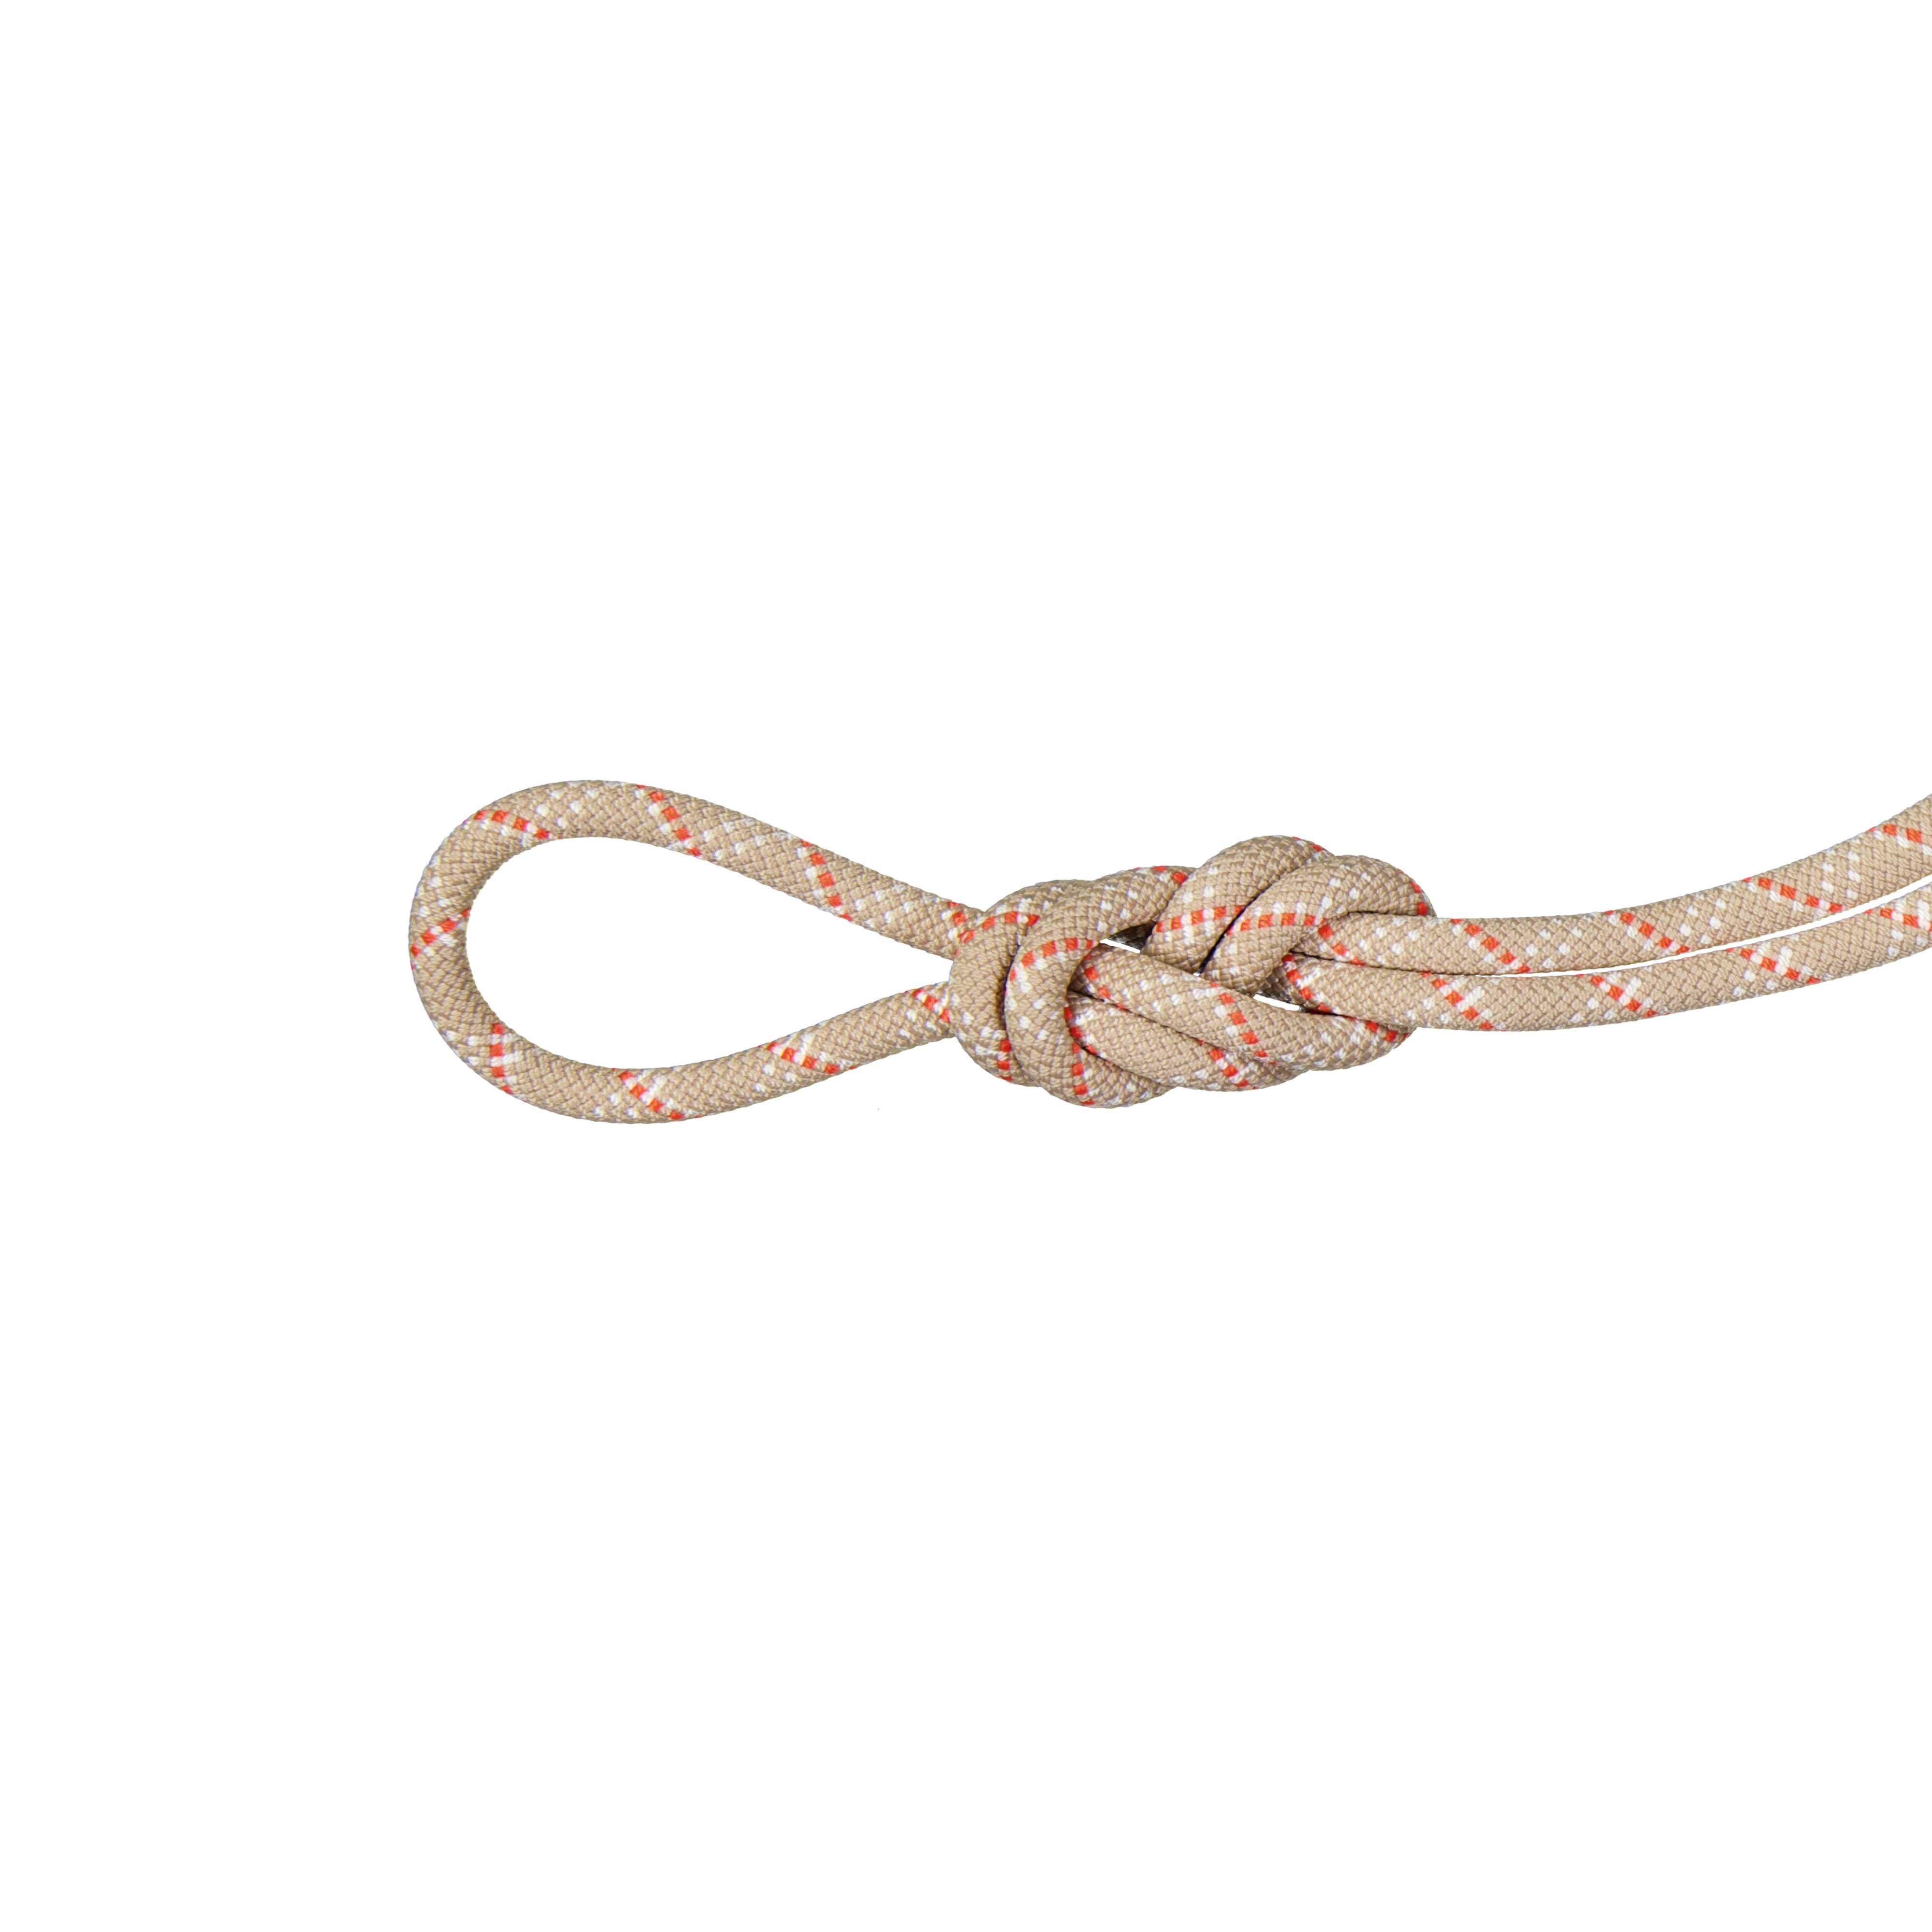 9.5 Gym Classic Rope - Classic Standard, desert-white, 40 m thumbnail